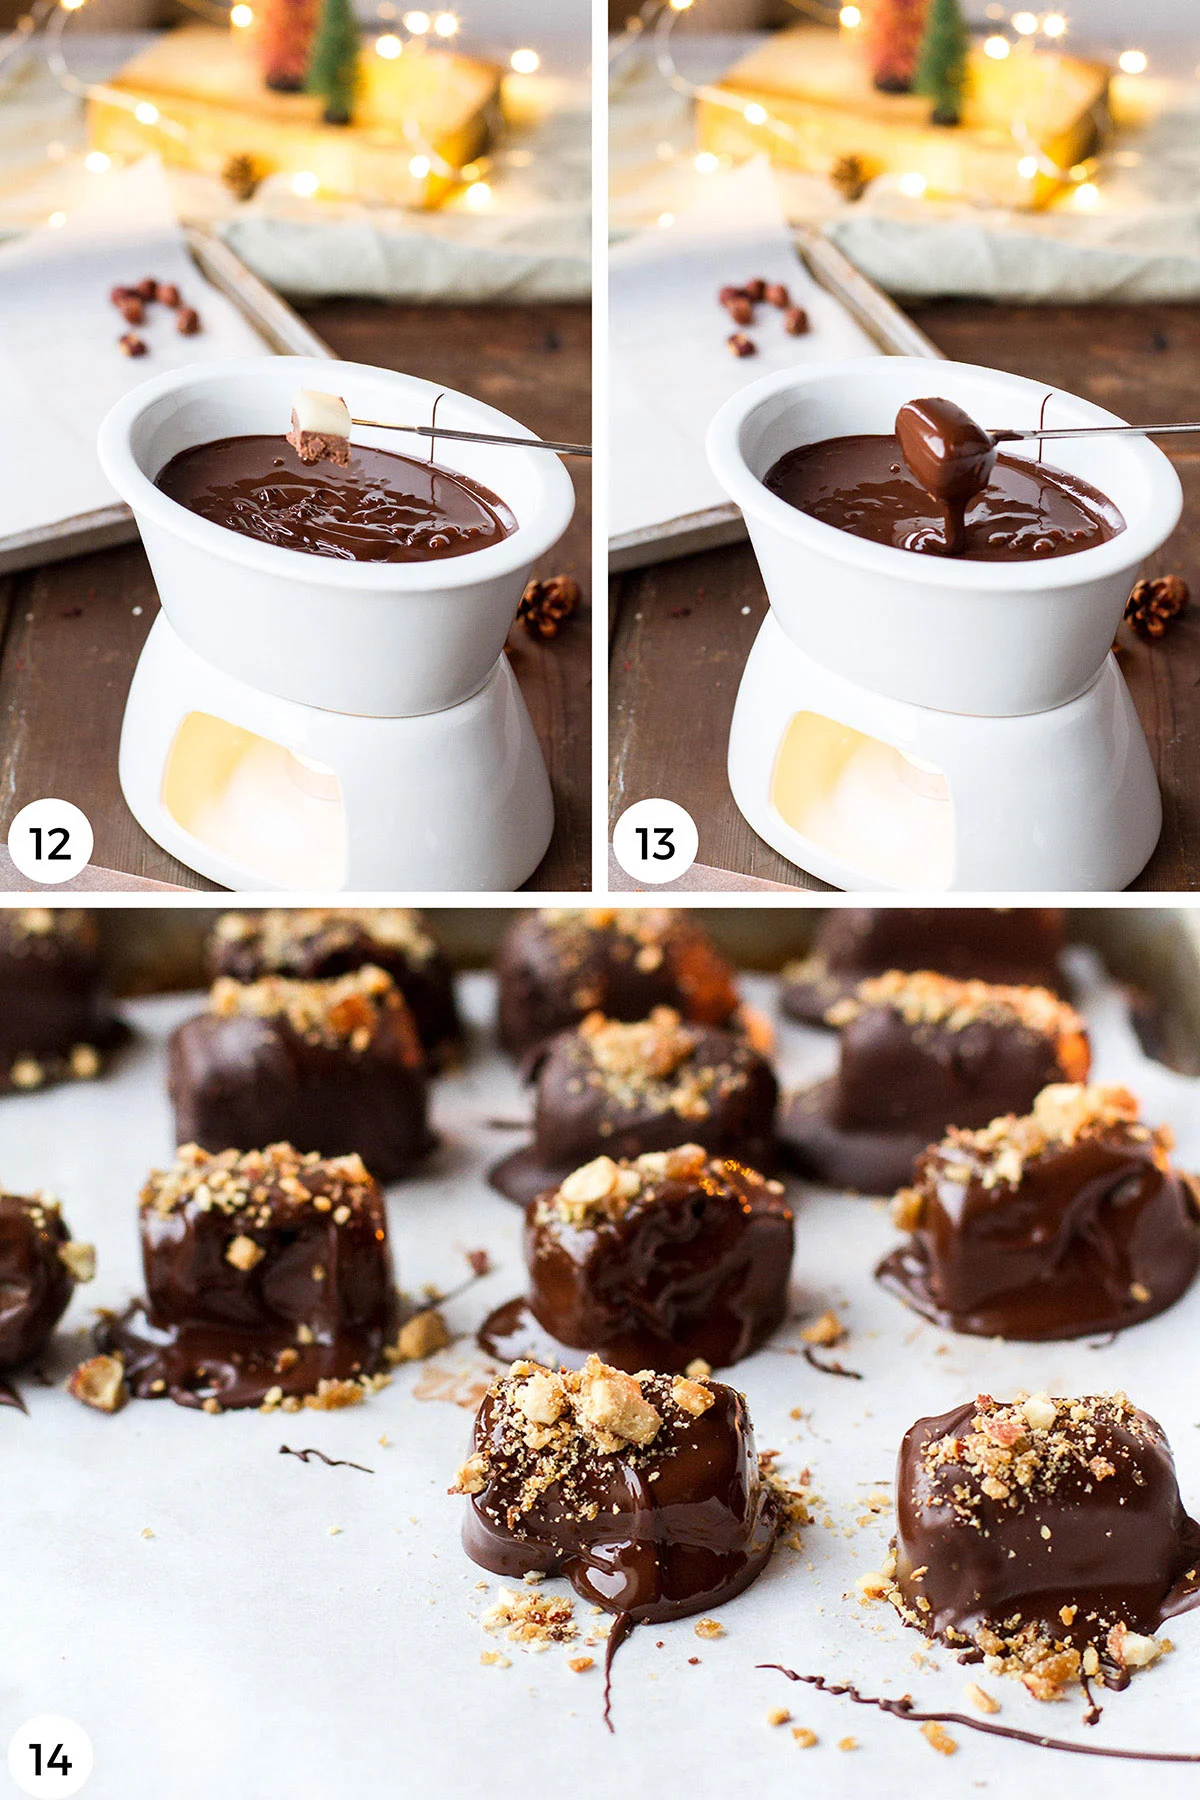 How to dip praline into chocolate.